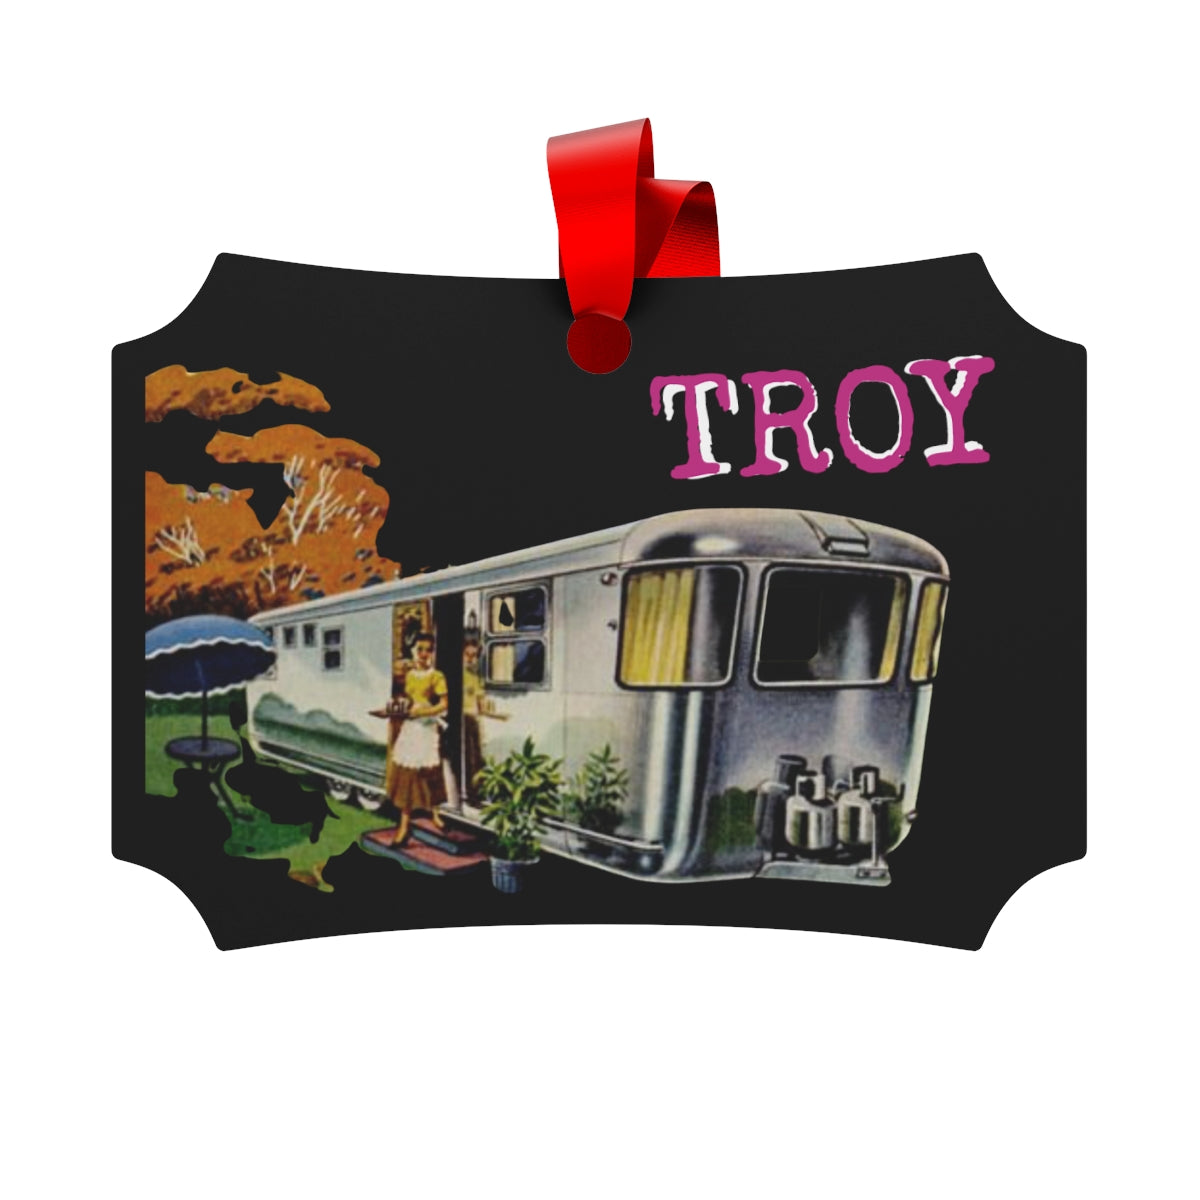 Trailer Troy Metallic Ornament